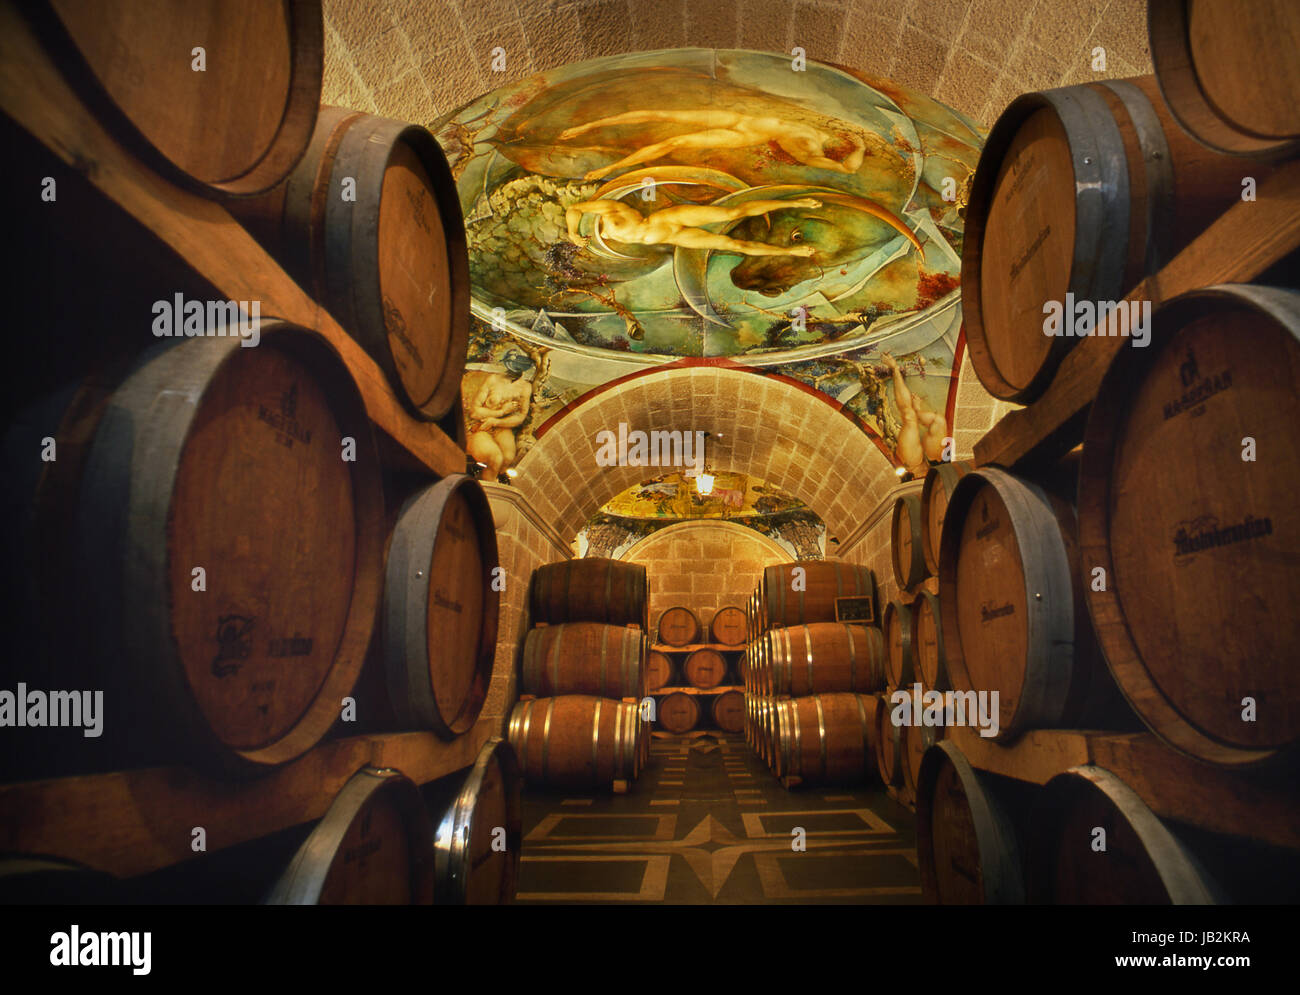 ITALIAN WINE Mastroberardino barrel ageing cellar featuring hand-painted frescoes combining the winery's ethos of art and fine wine Campania, Italy Stock Photo